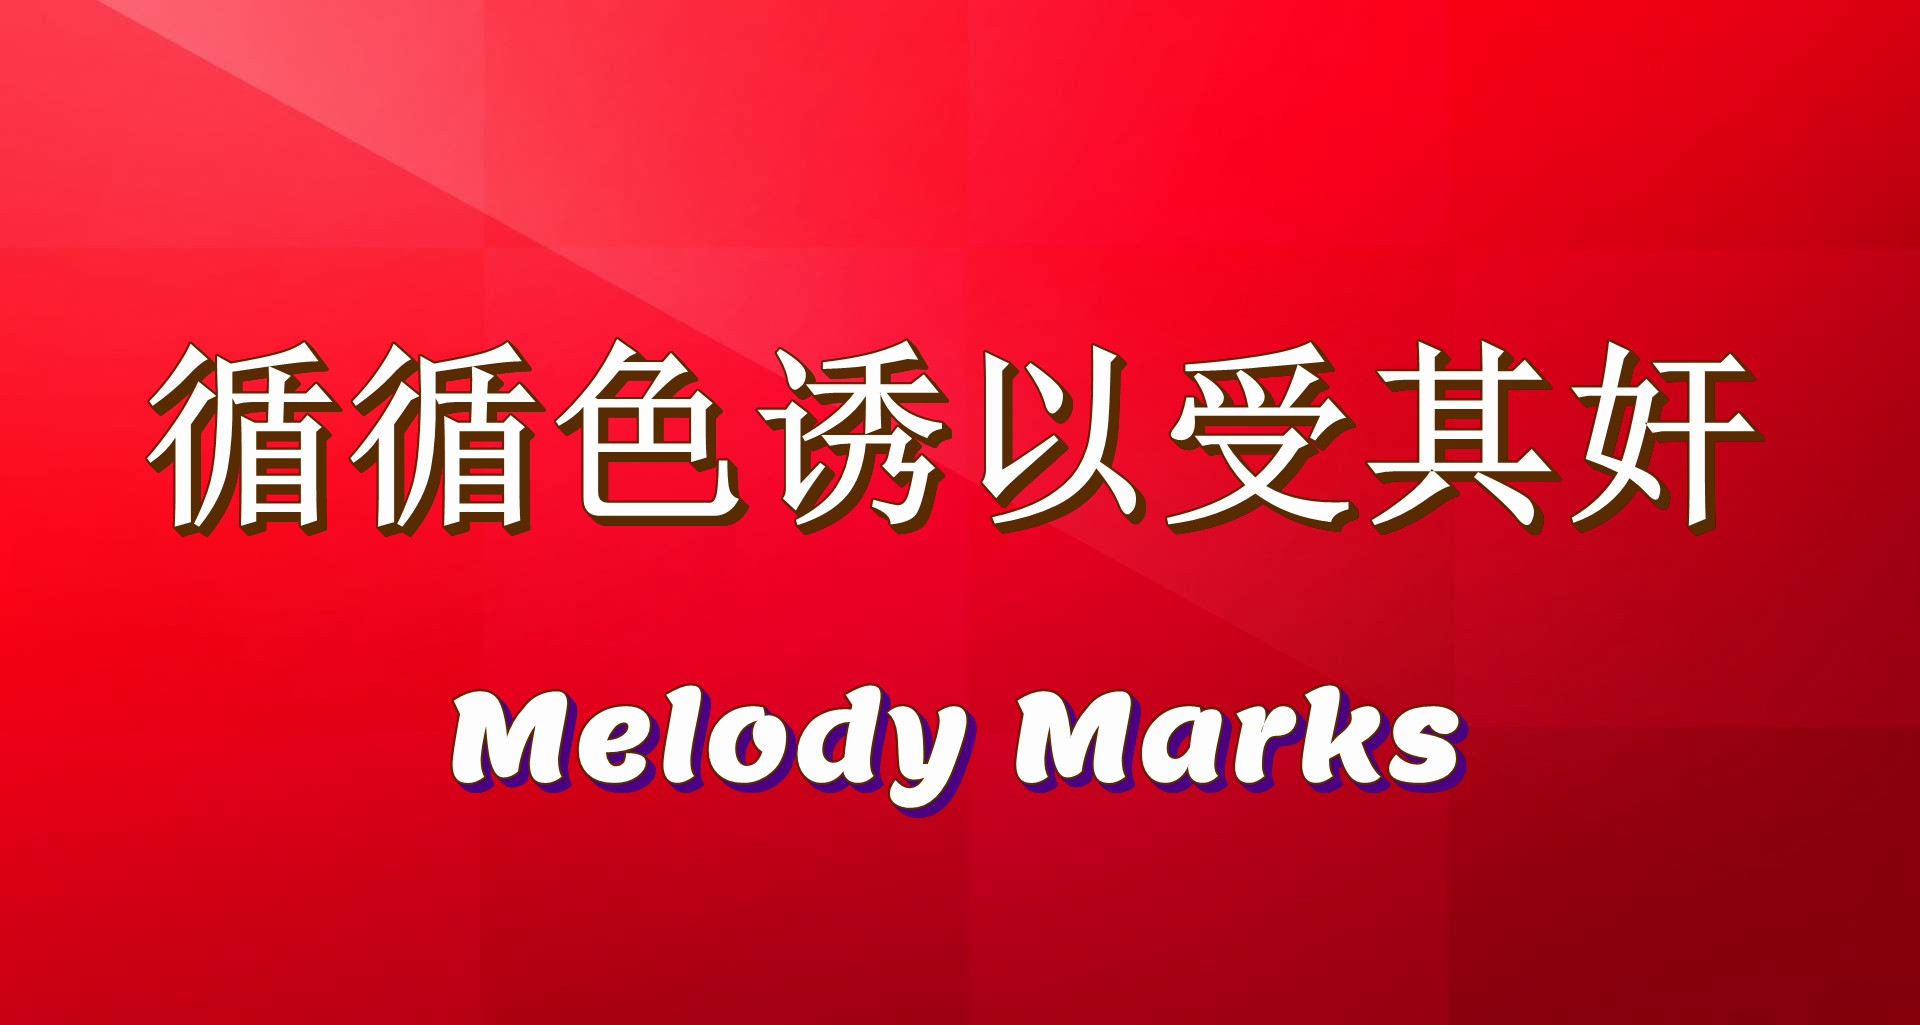 Melody marks biqle